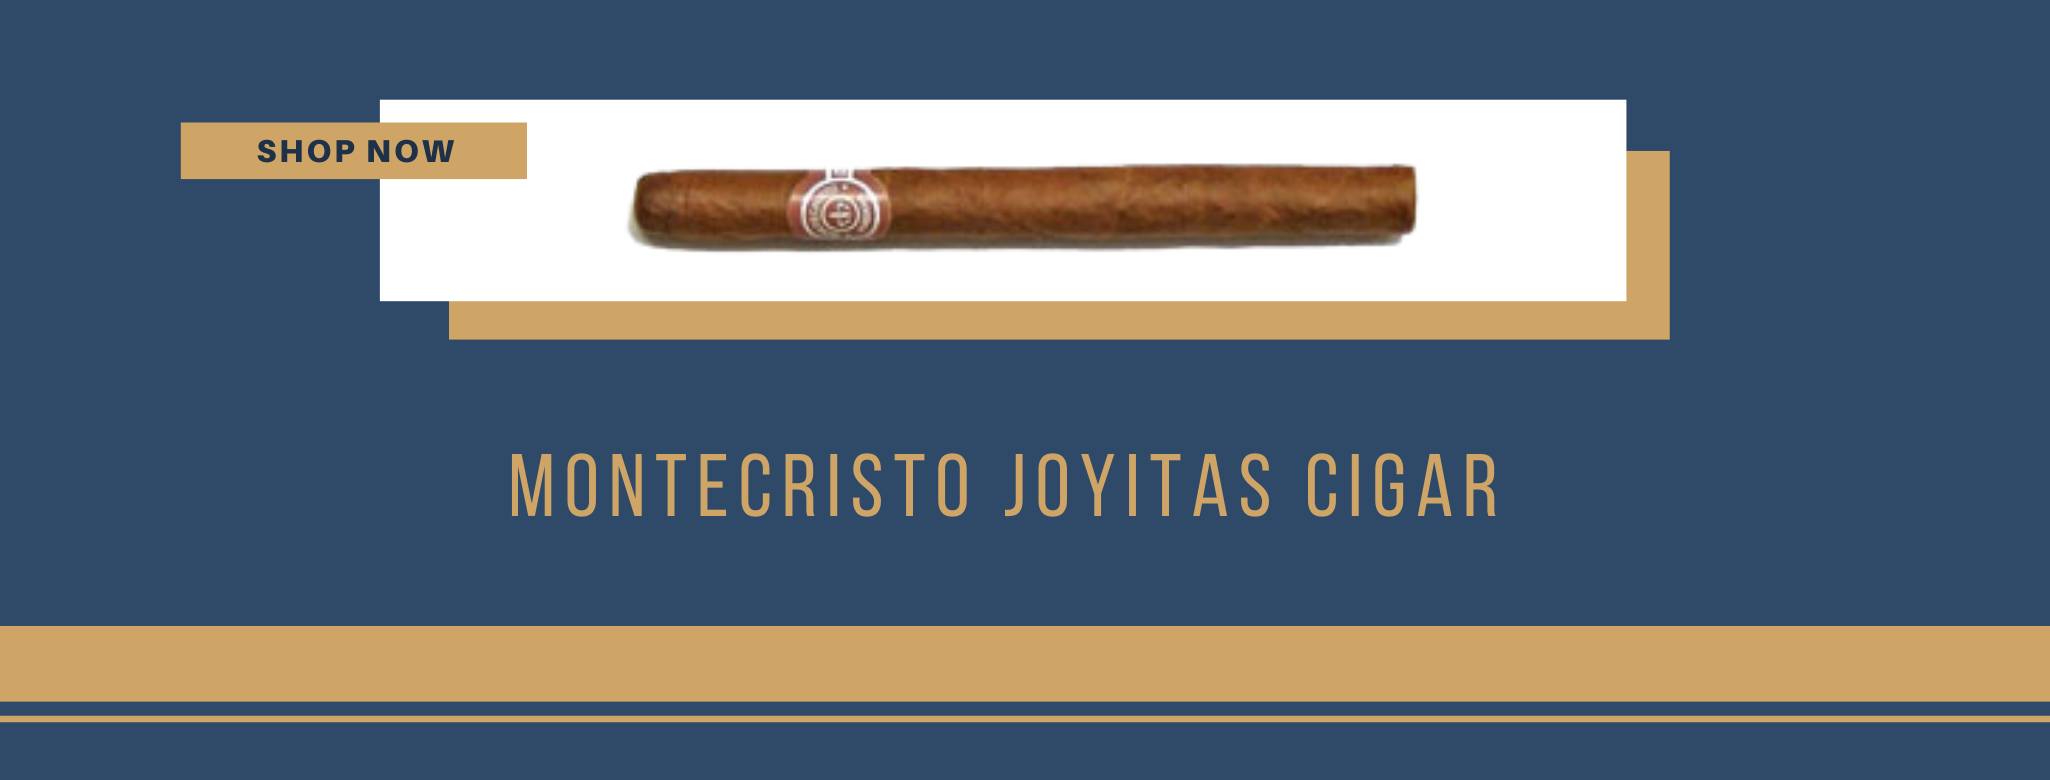 Buy Montecristio Joyitas cigars online